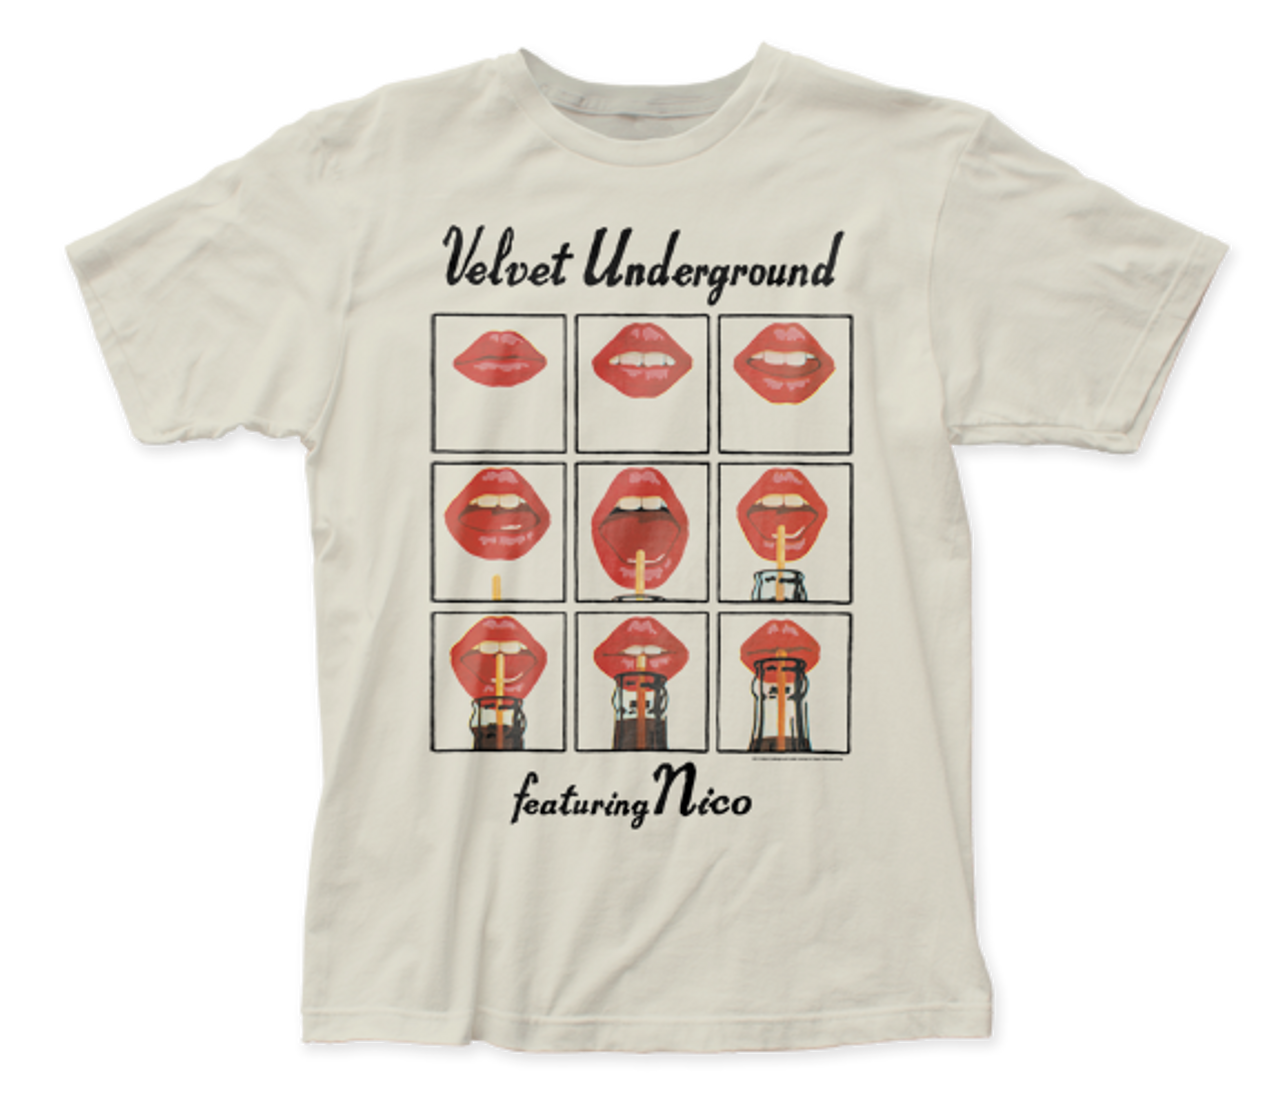 Vintage The Velvet Underground en nico x andy warhol tour album single big image American rock band pop art tekening promo t-shirts storeQ Kleding Meisjeskleding Tops & T-shirts T-shirts T-shirts met print 